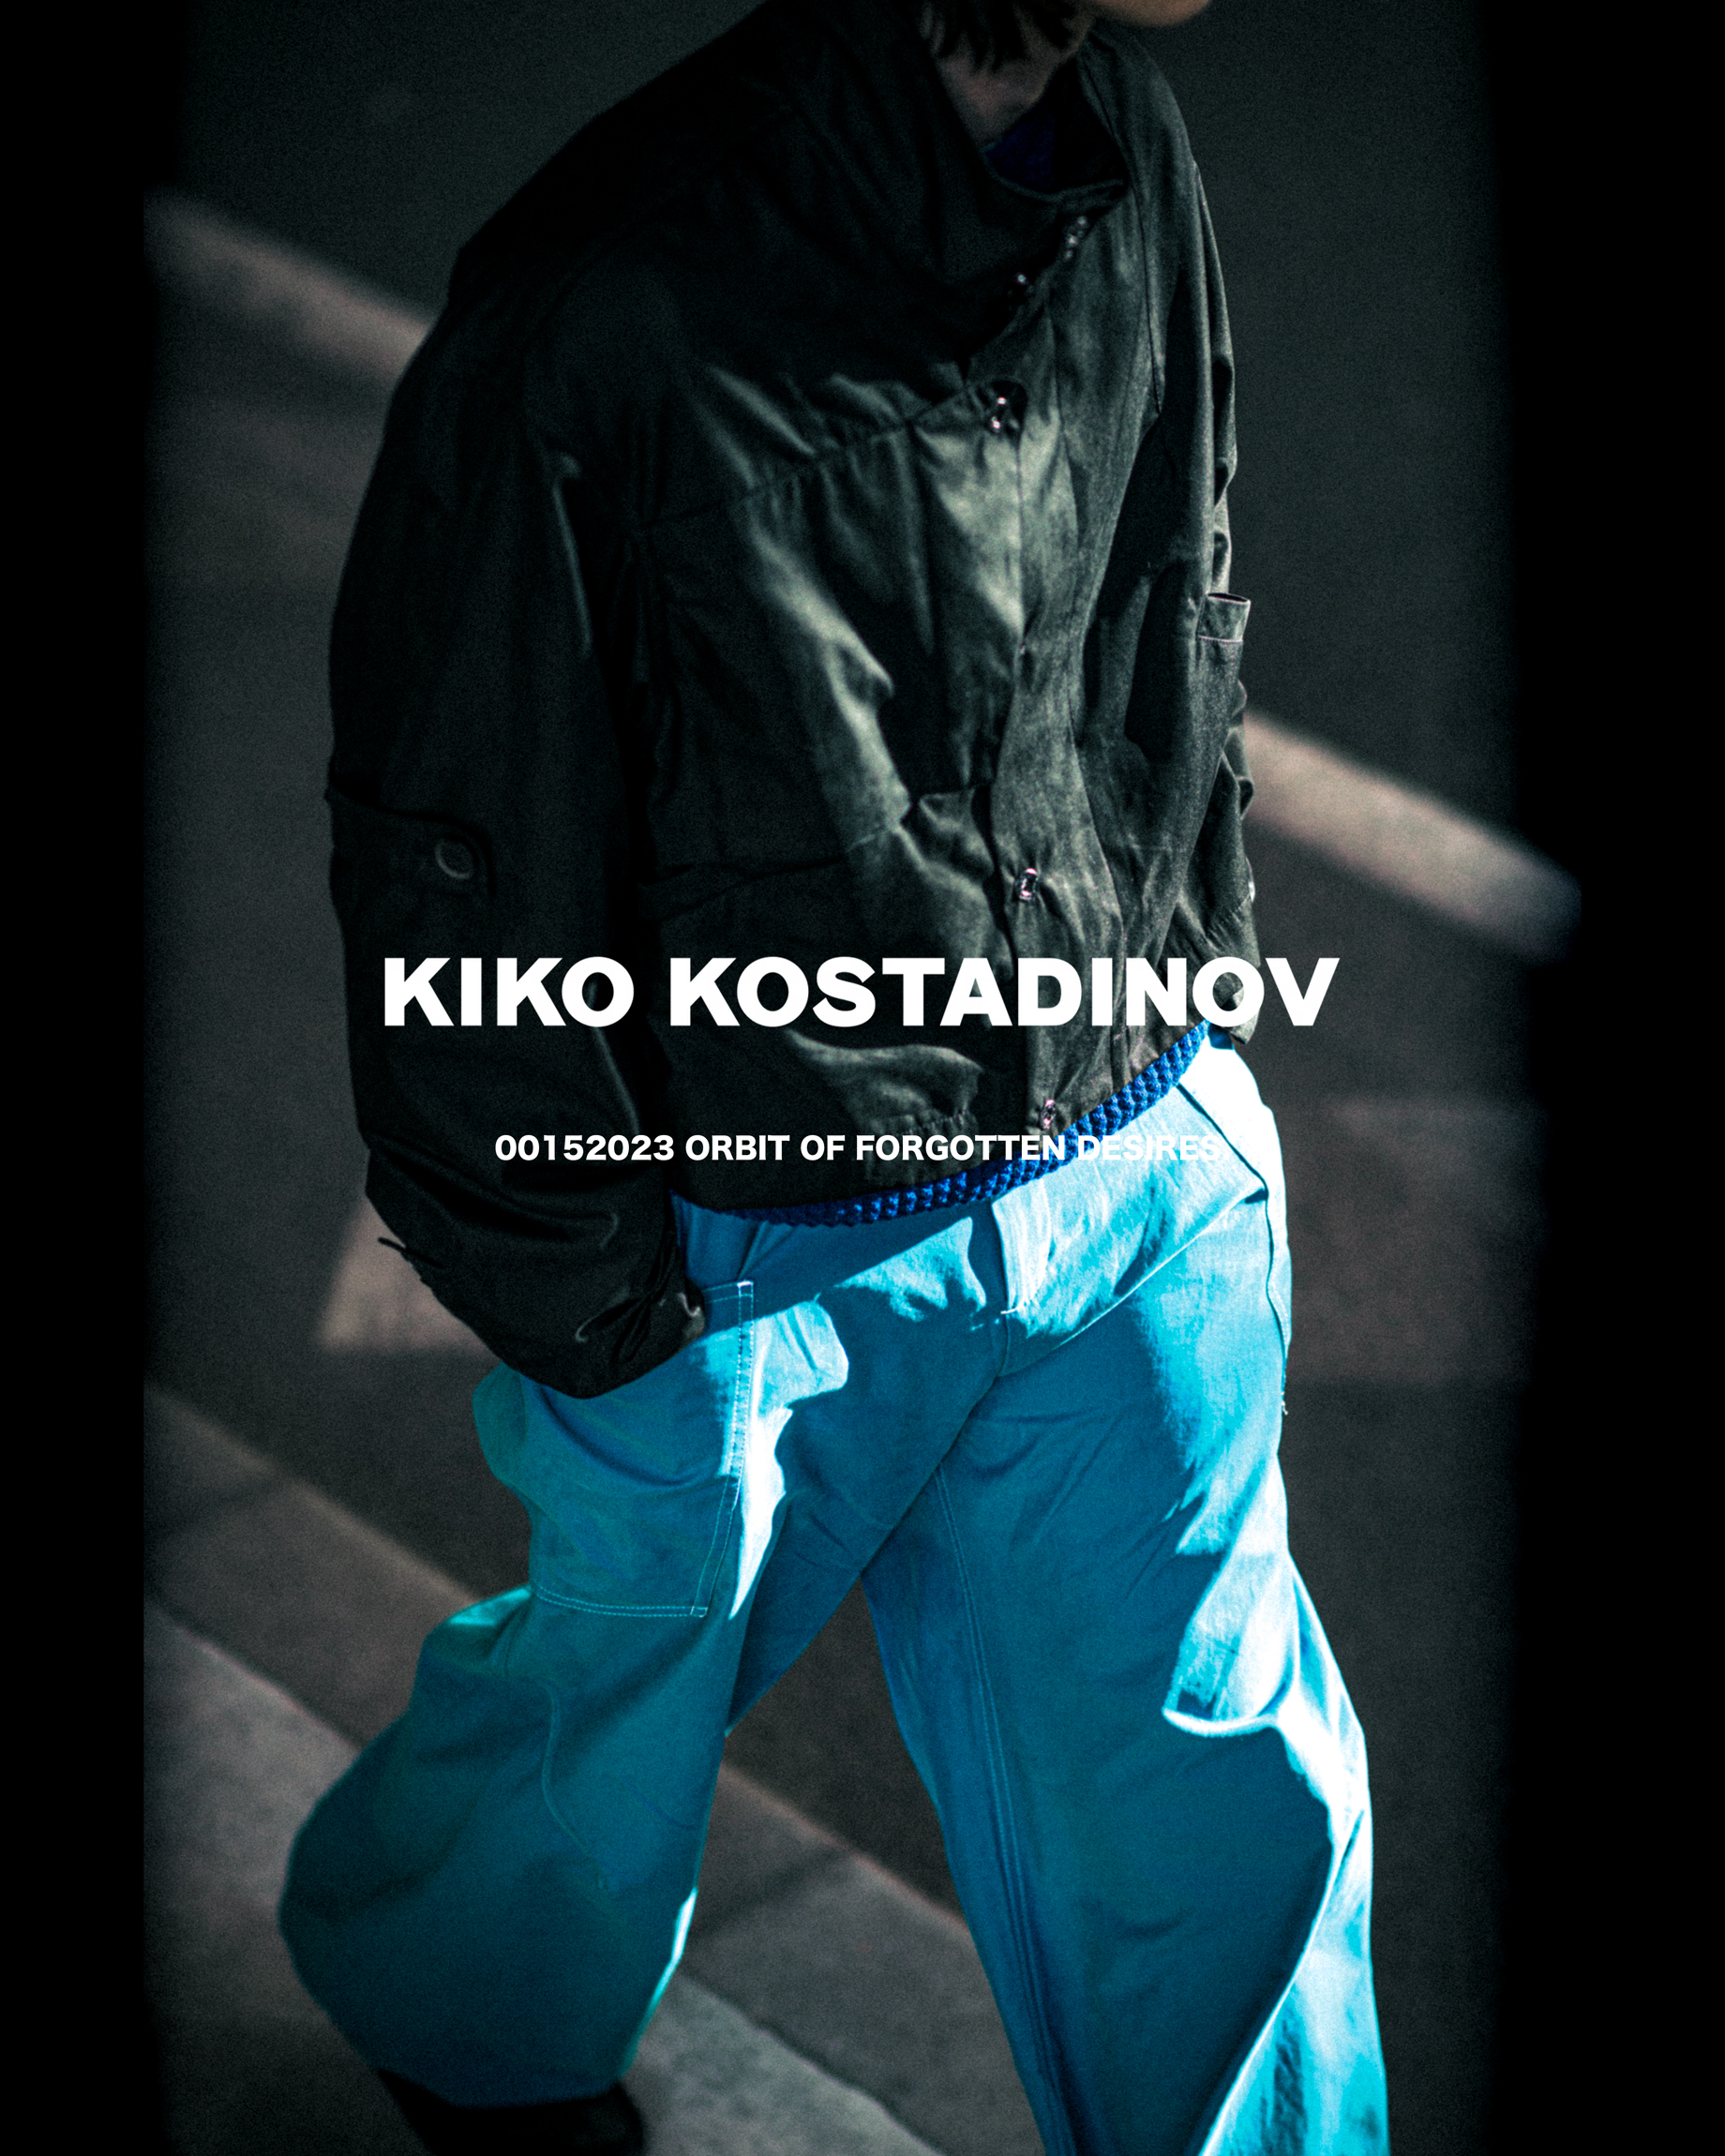 KIKO KOSTADINOV 00152023 ORBIT OF FORGOTTEN DESIRES.